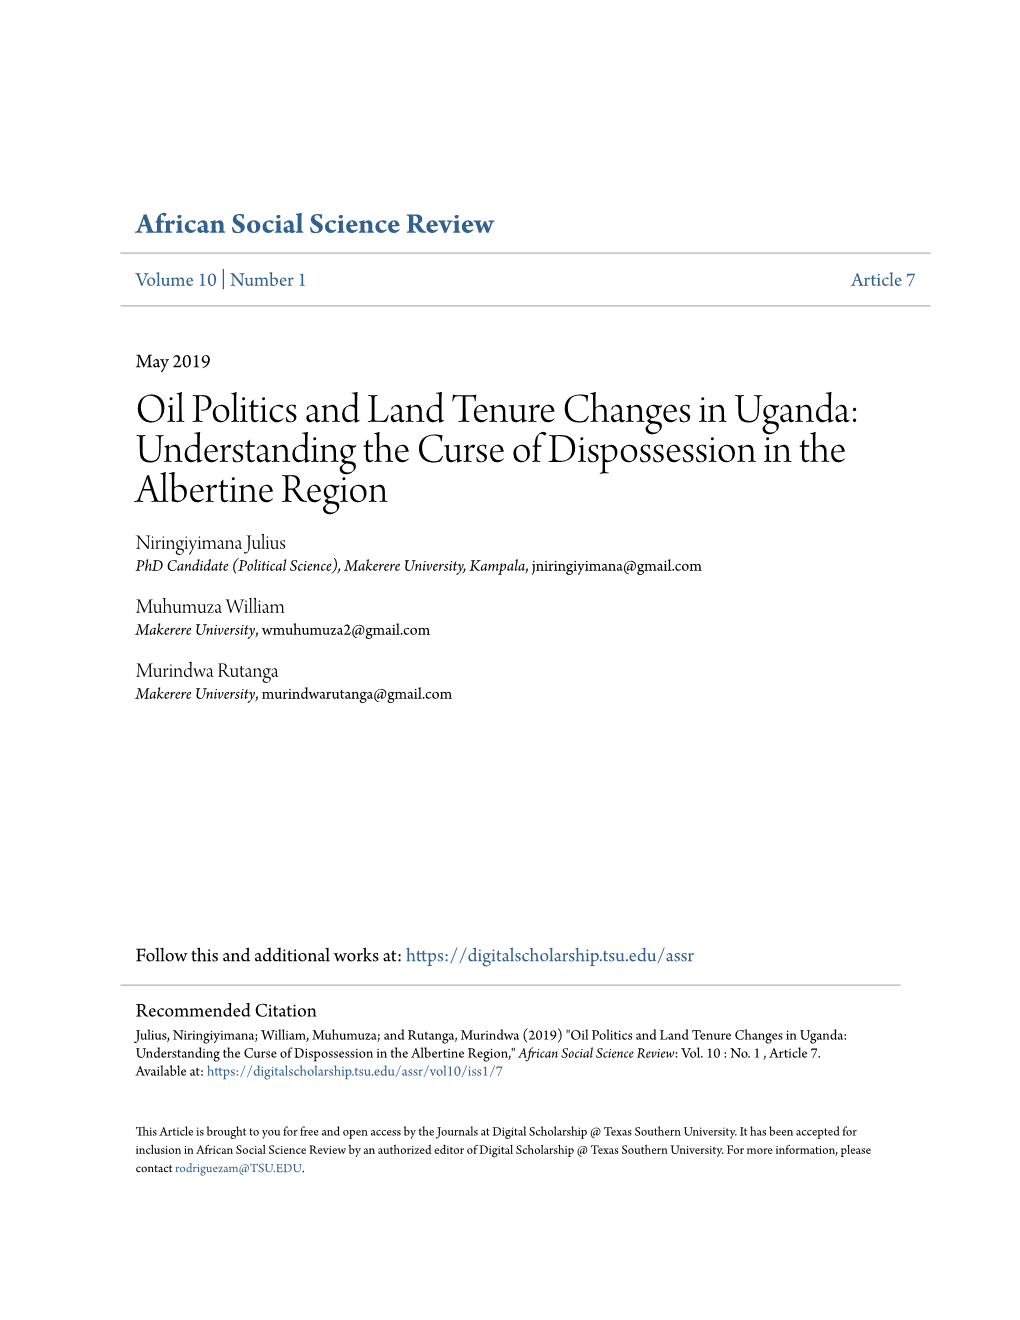 Oil Politics and Land Tenure Changes in Uganda